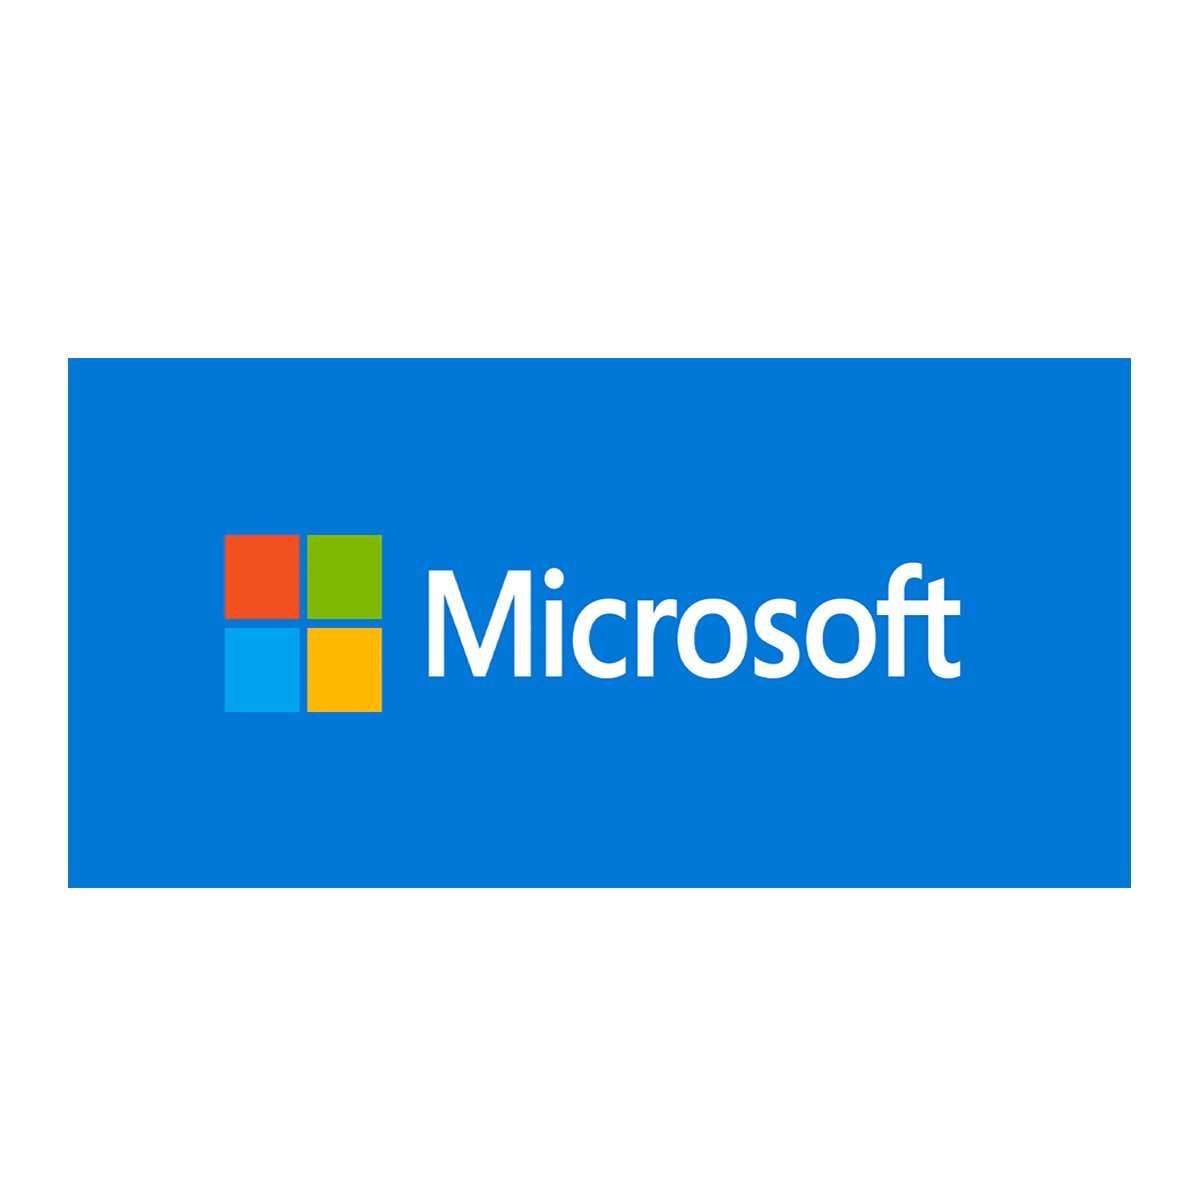 Microsoft 365 Business Premium – Synnex FPT